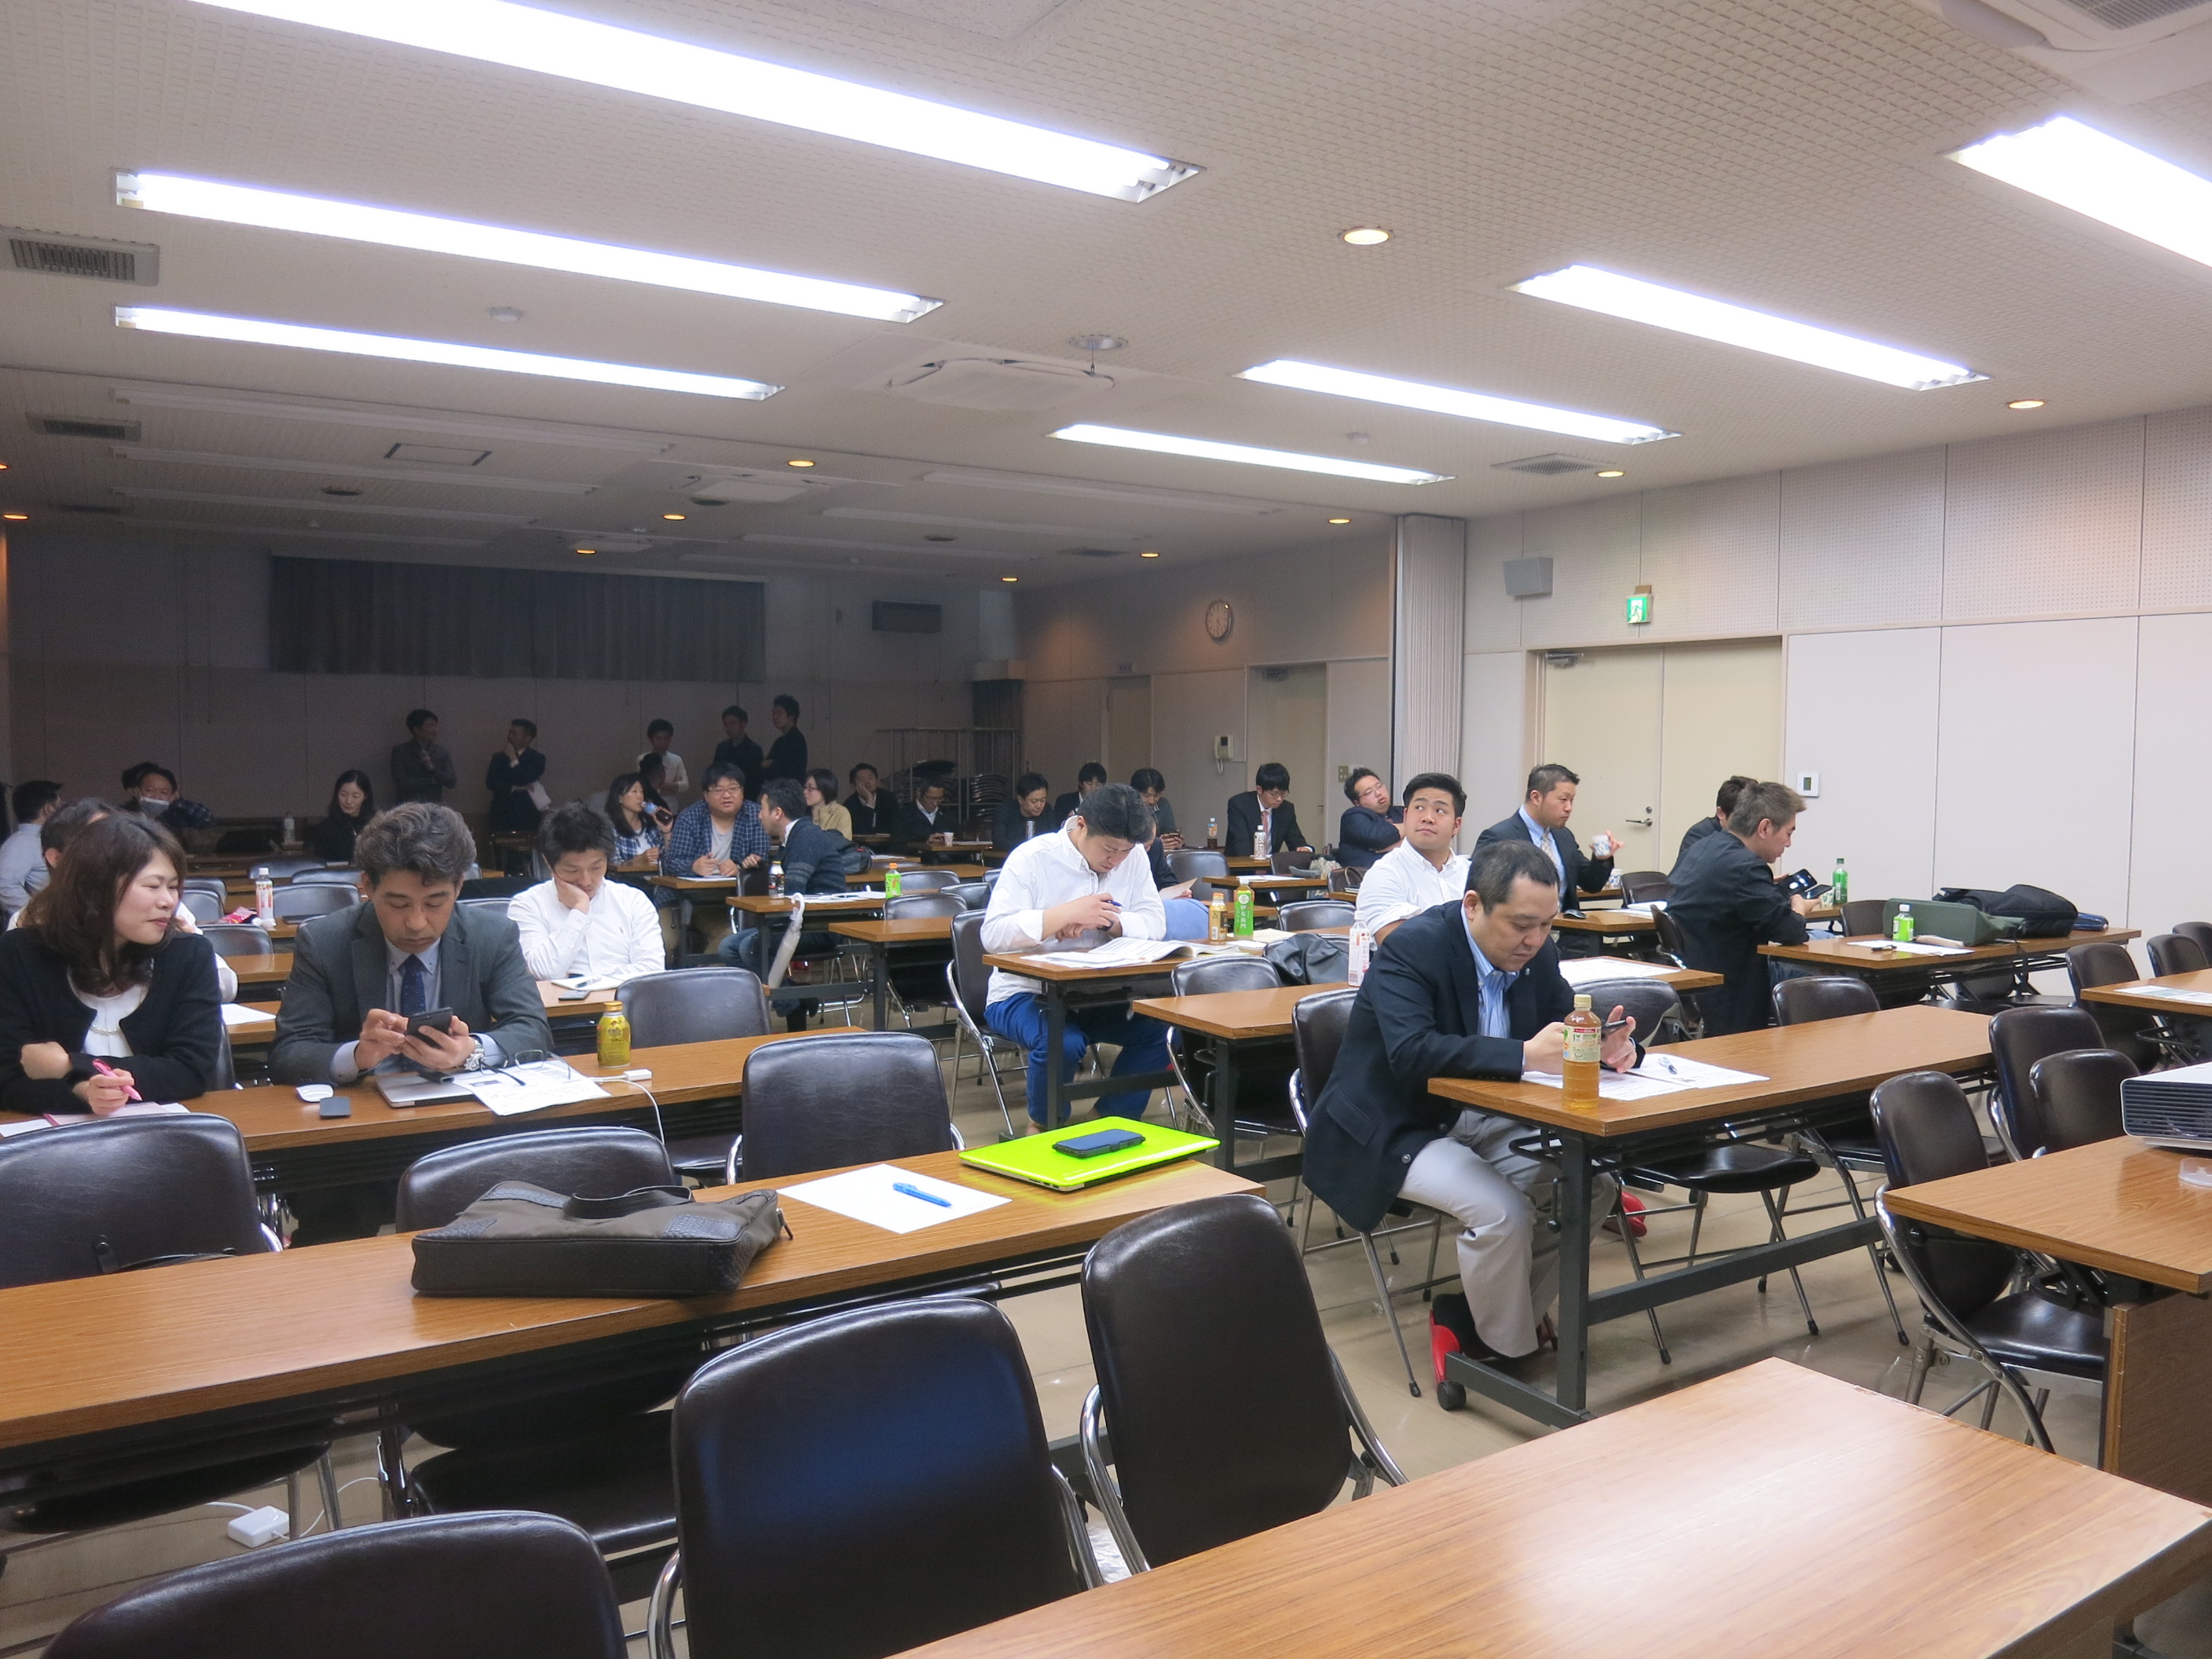 SNS（埼玉日歯スタディーグループ）勉強会に参加してきました。